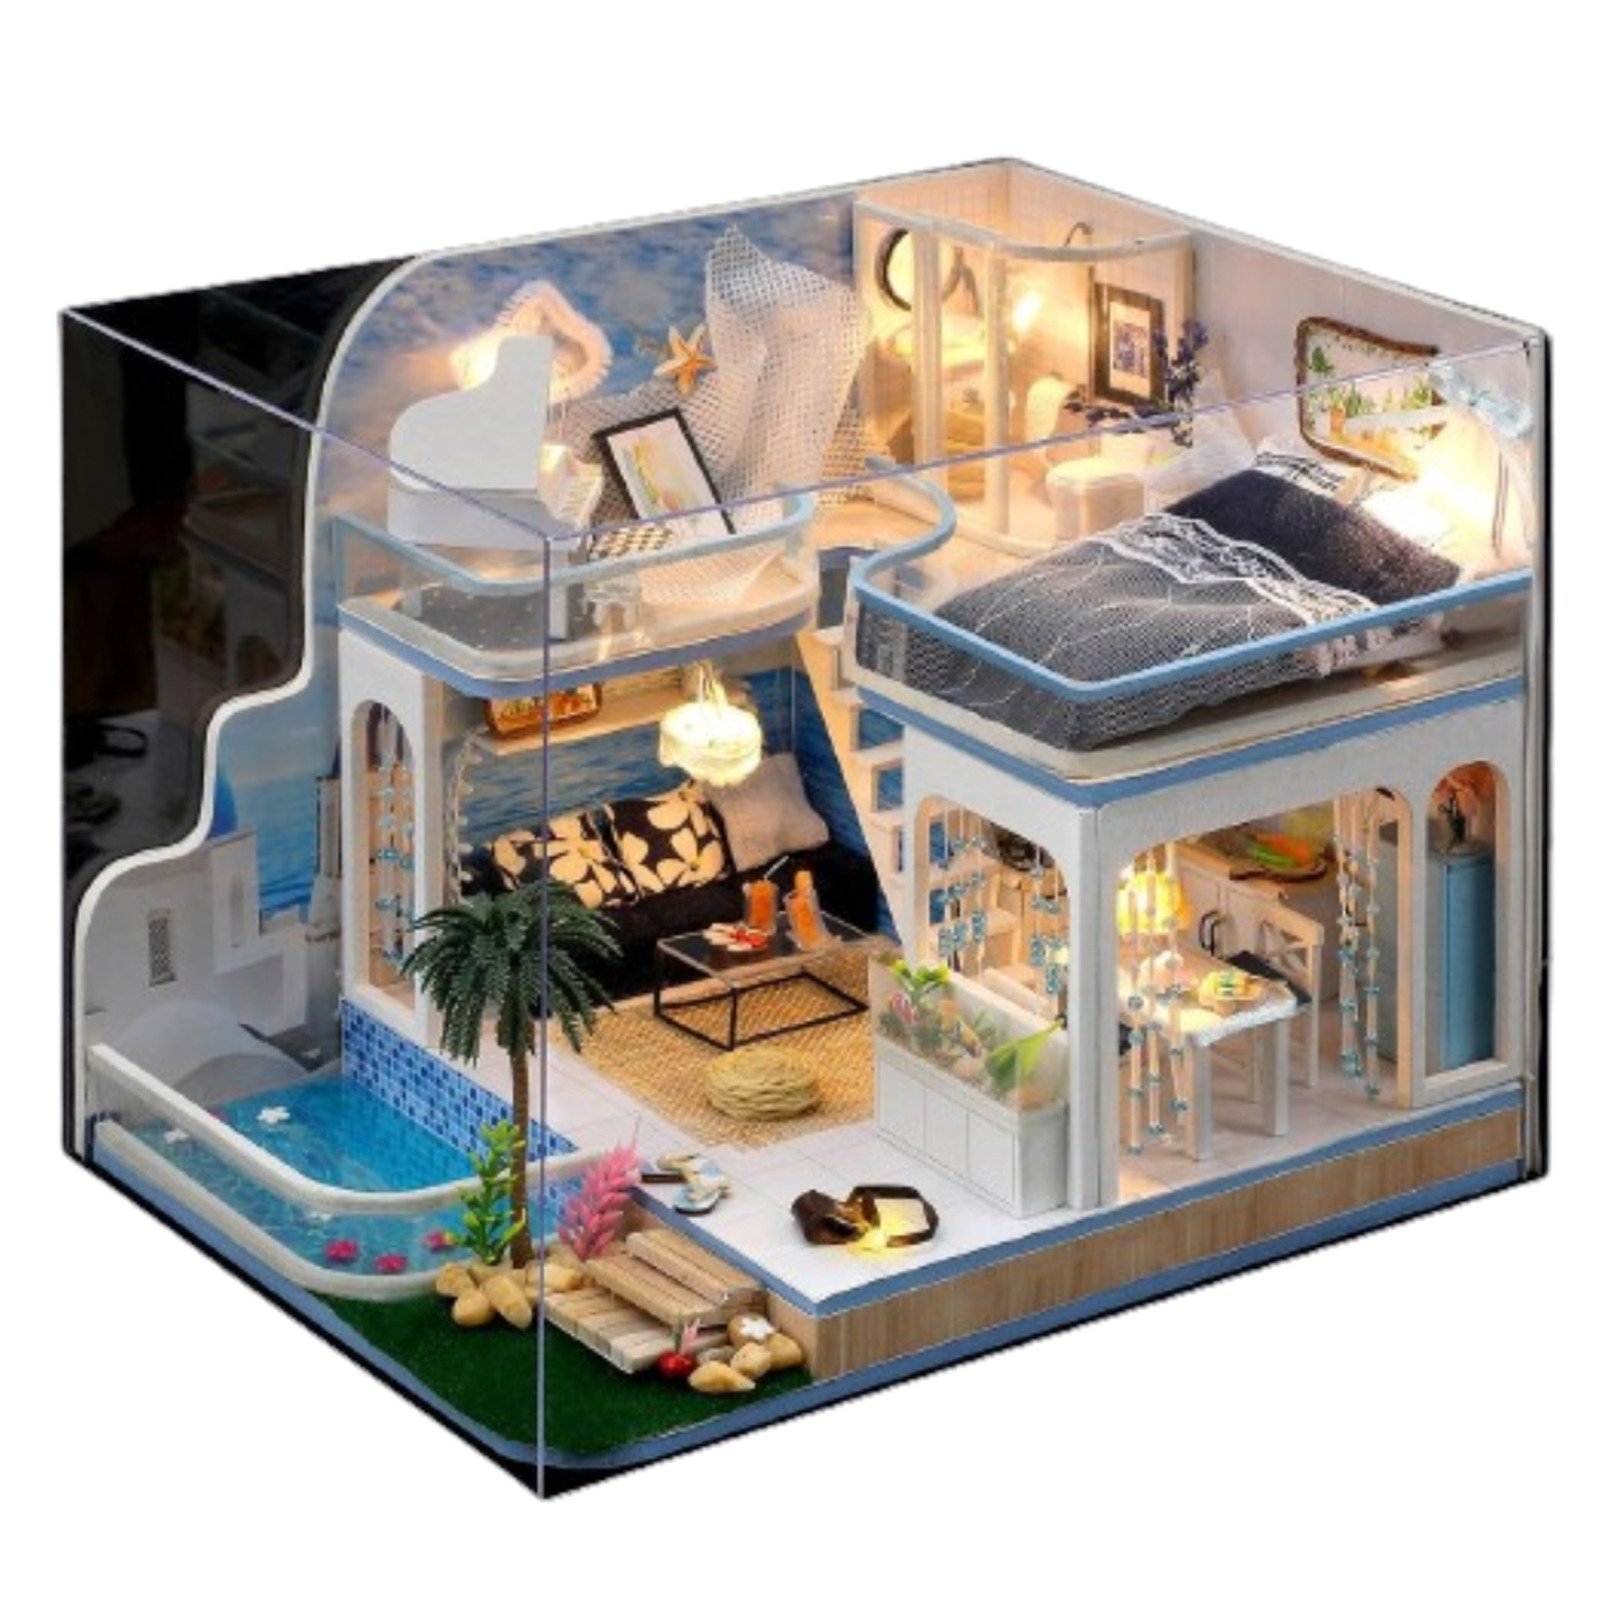 DIY Miniature House Kits,Tiny House Pet Shop with Furniture & LED Home Decor New